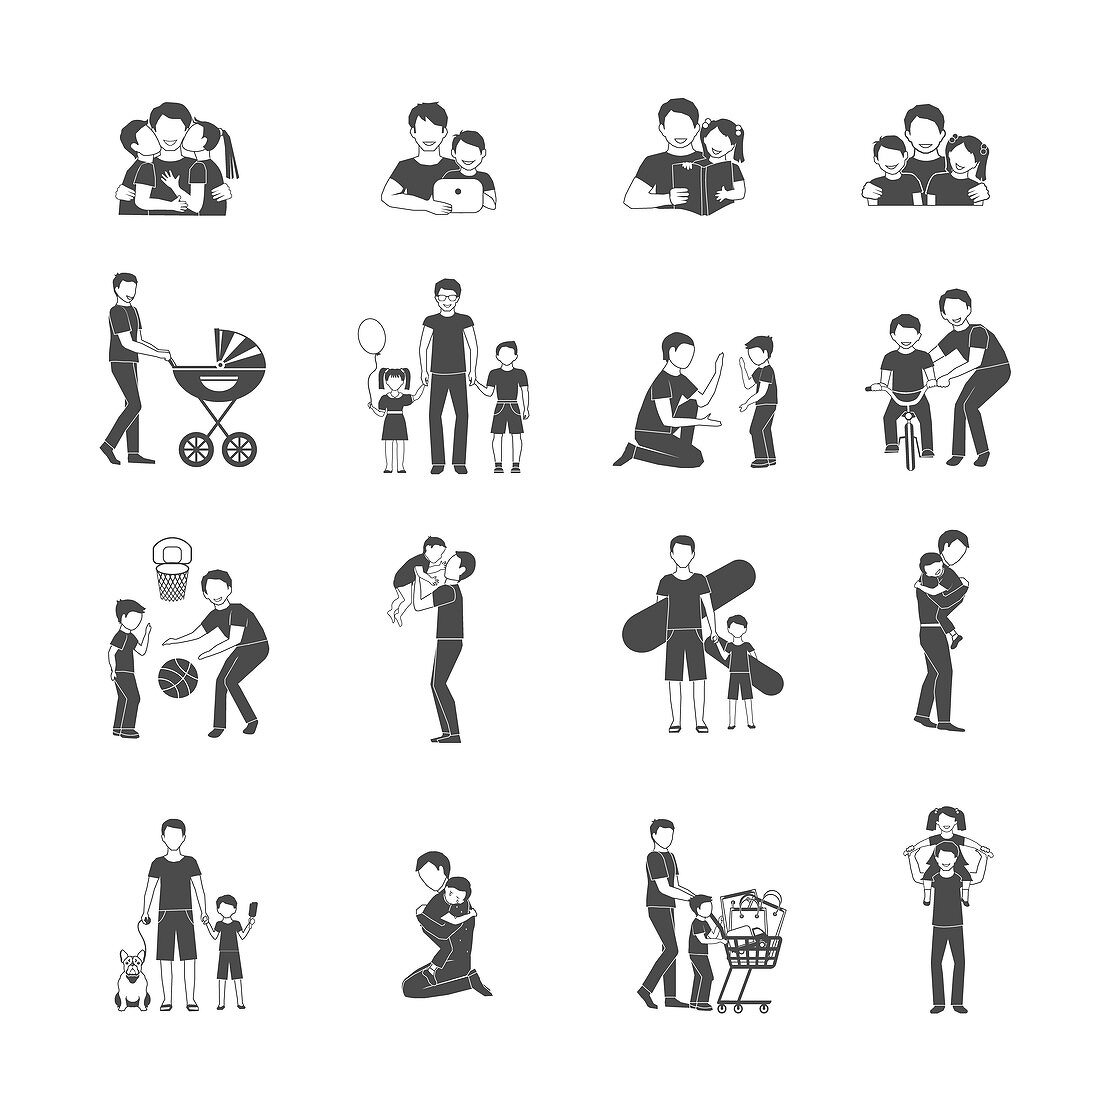 Fatherhood icons, illustration